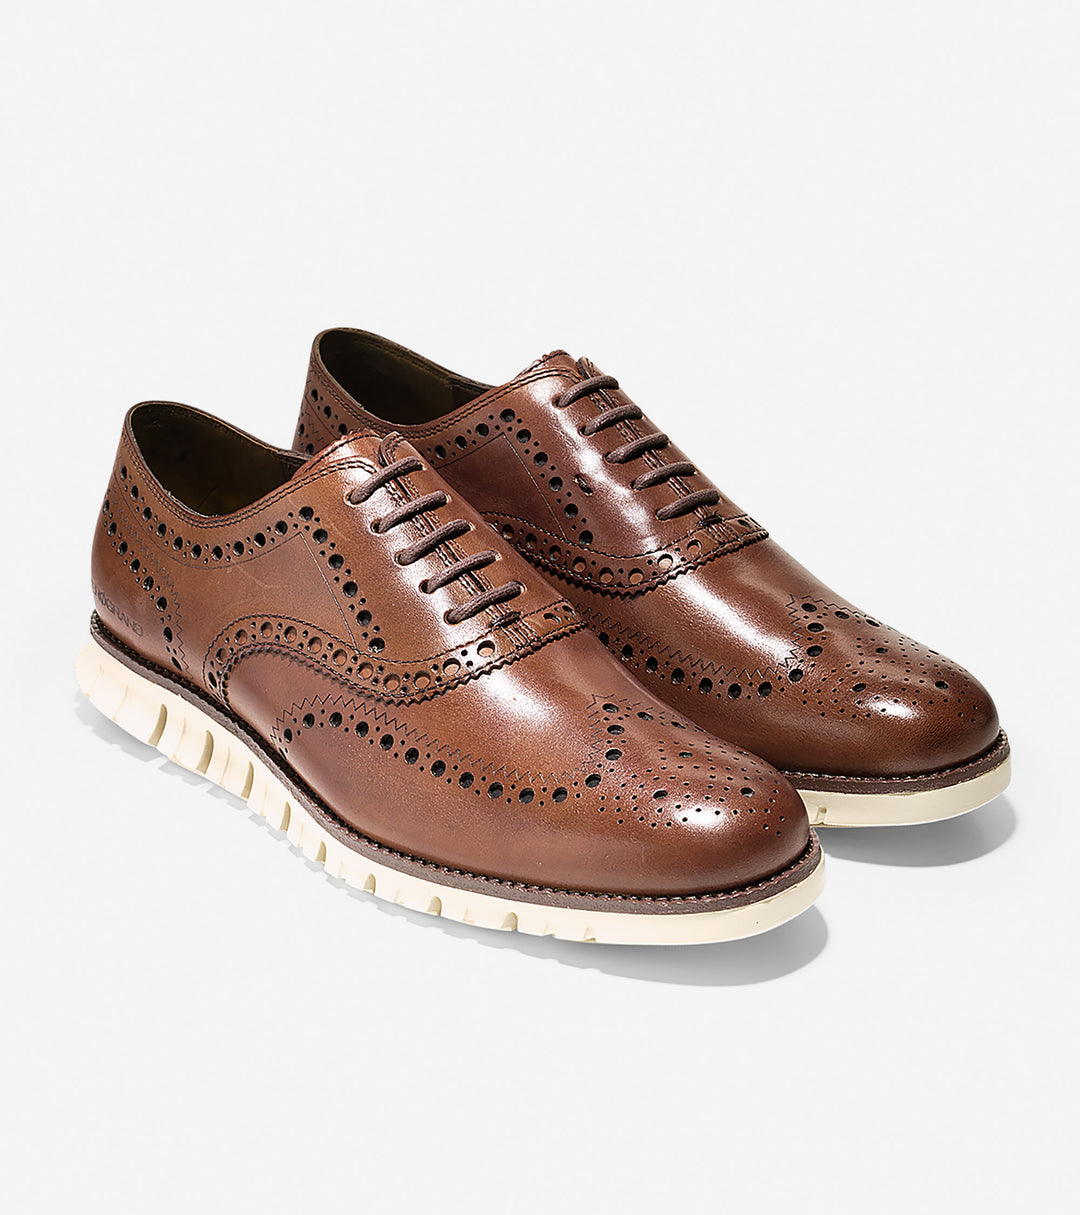 Men's Zerogrand Wingtip Oxford British Tan - Orleans Shoe Co.